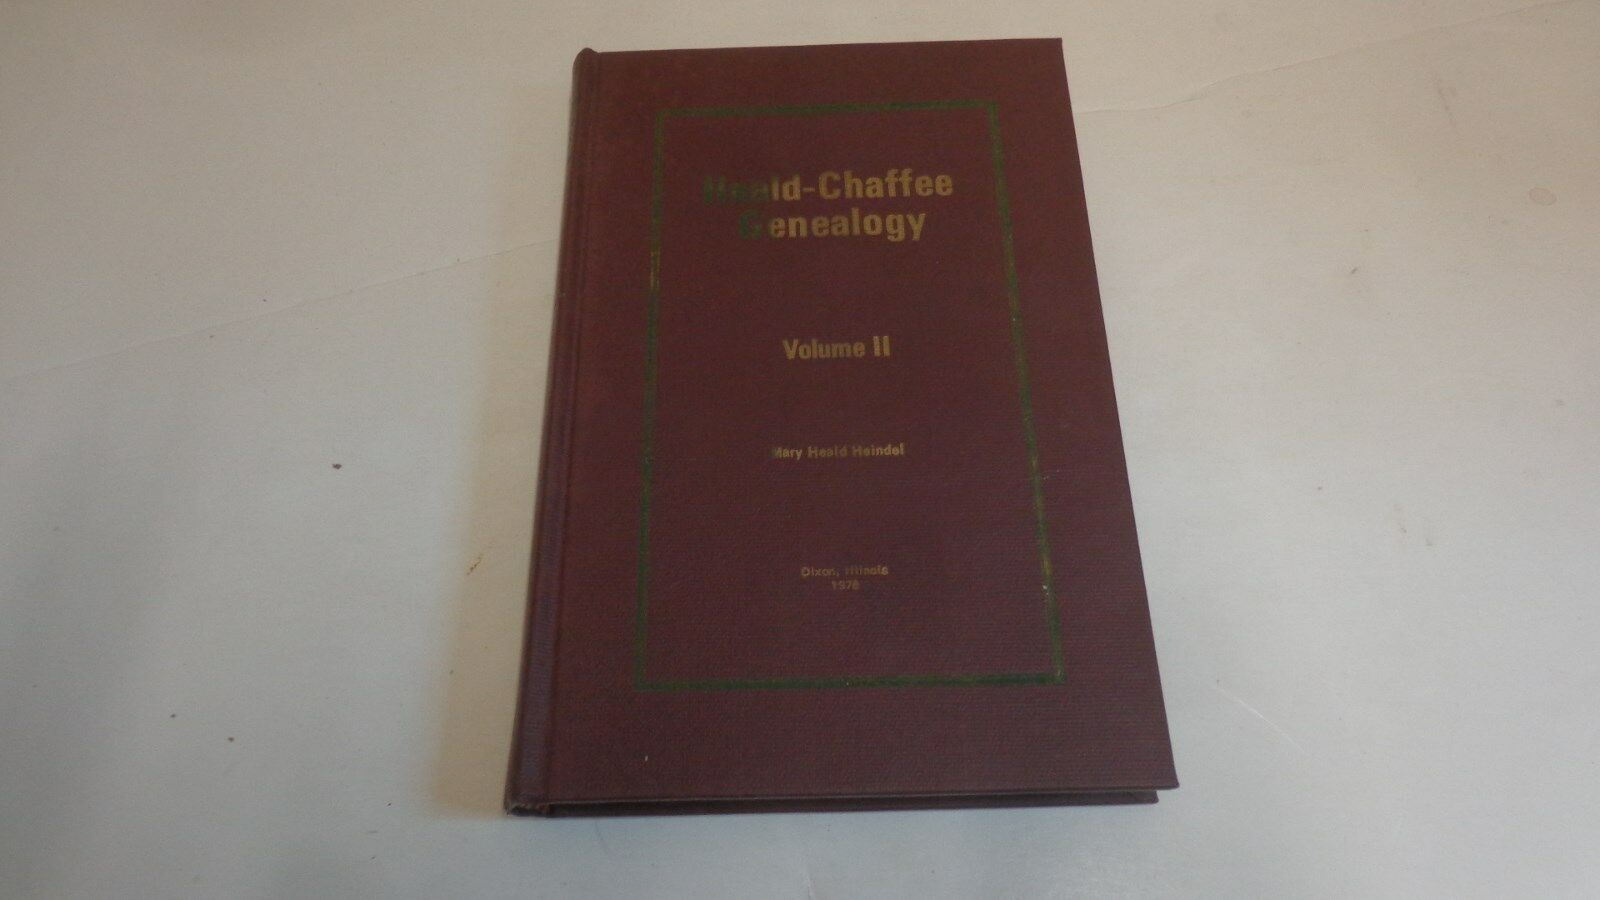 *heald-chaffee Genealogy Volume Ii By Mary Heald Heindel